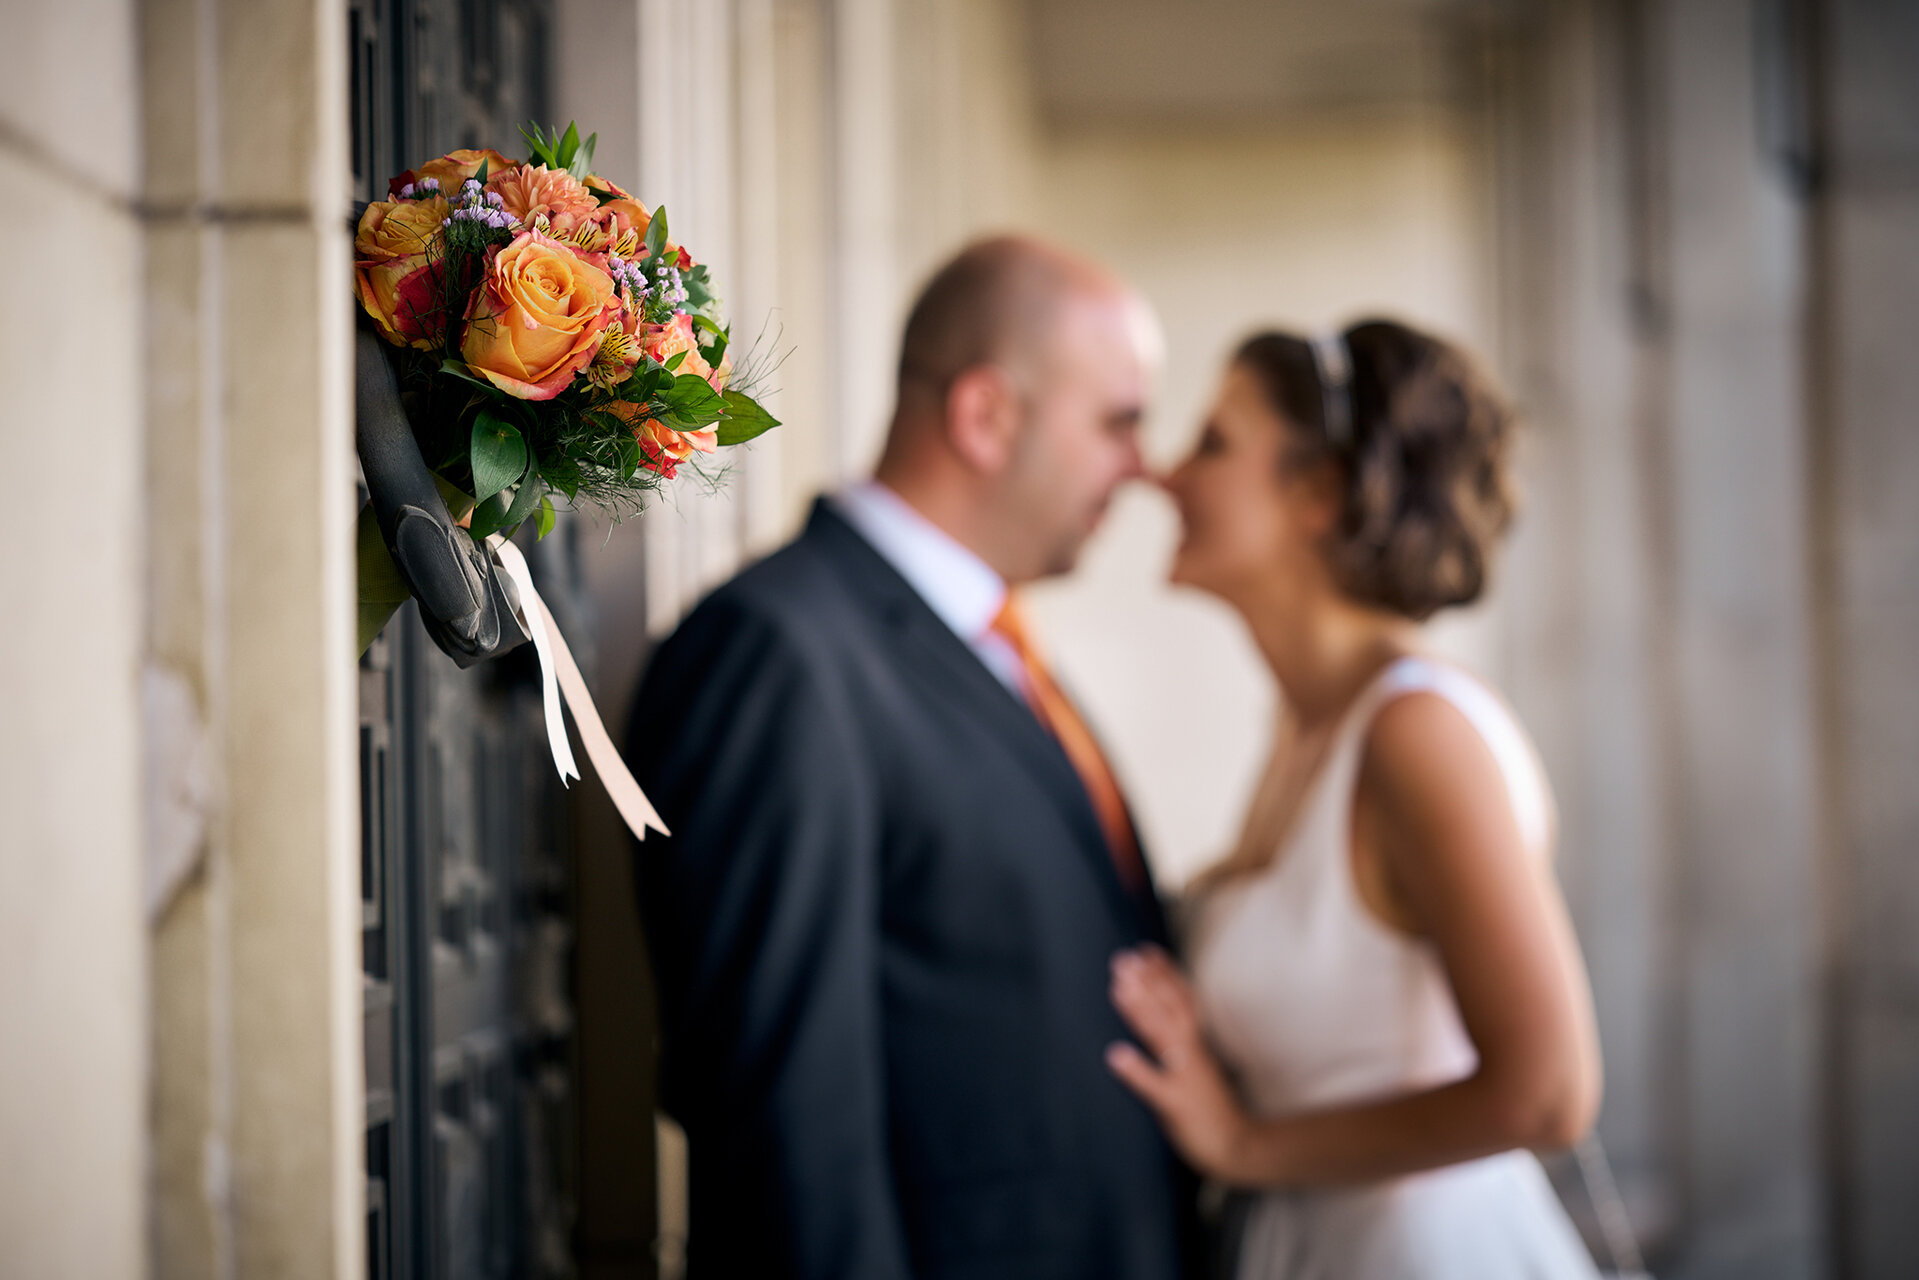 Photo in Wedding | Author Margarita Angelova - fotomargo111 | PHOTO FORUM